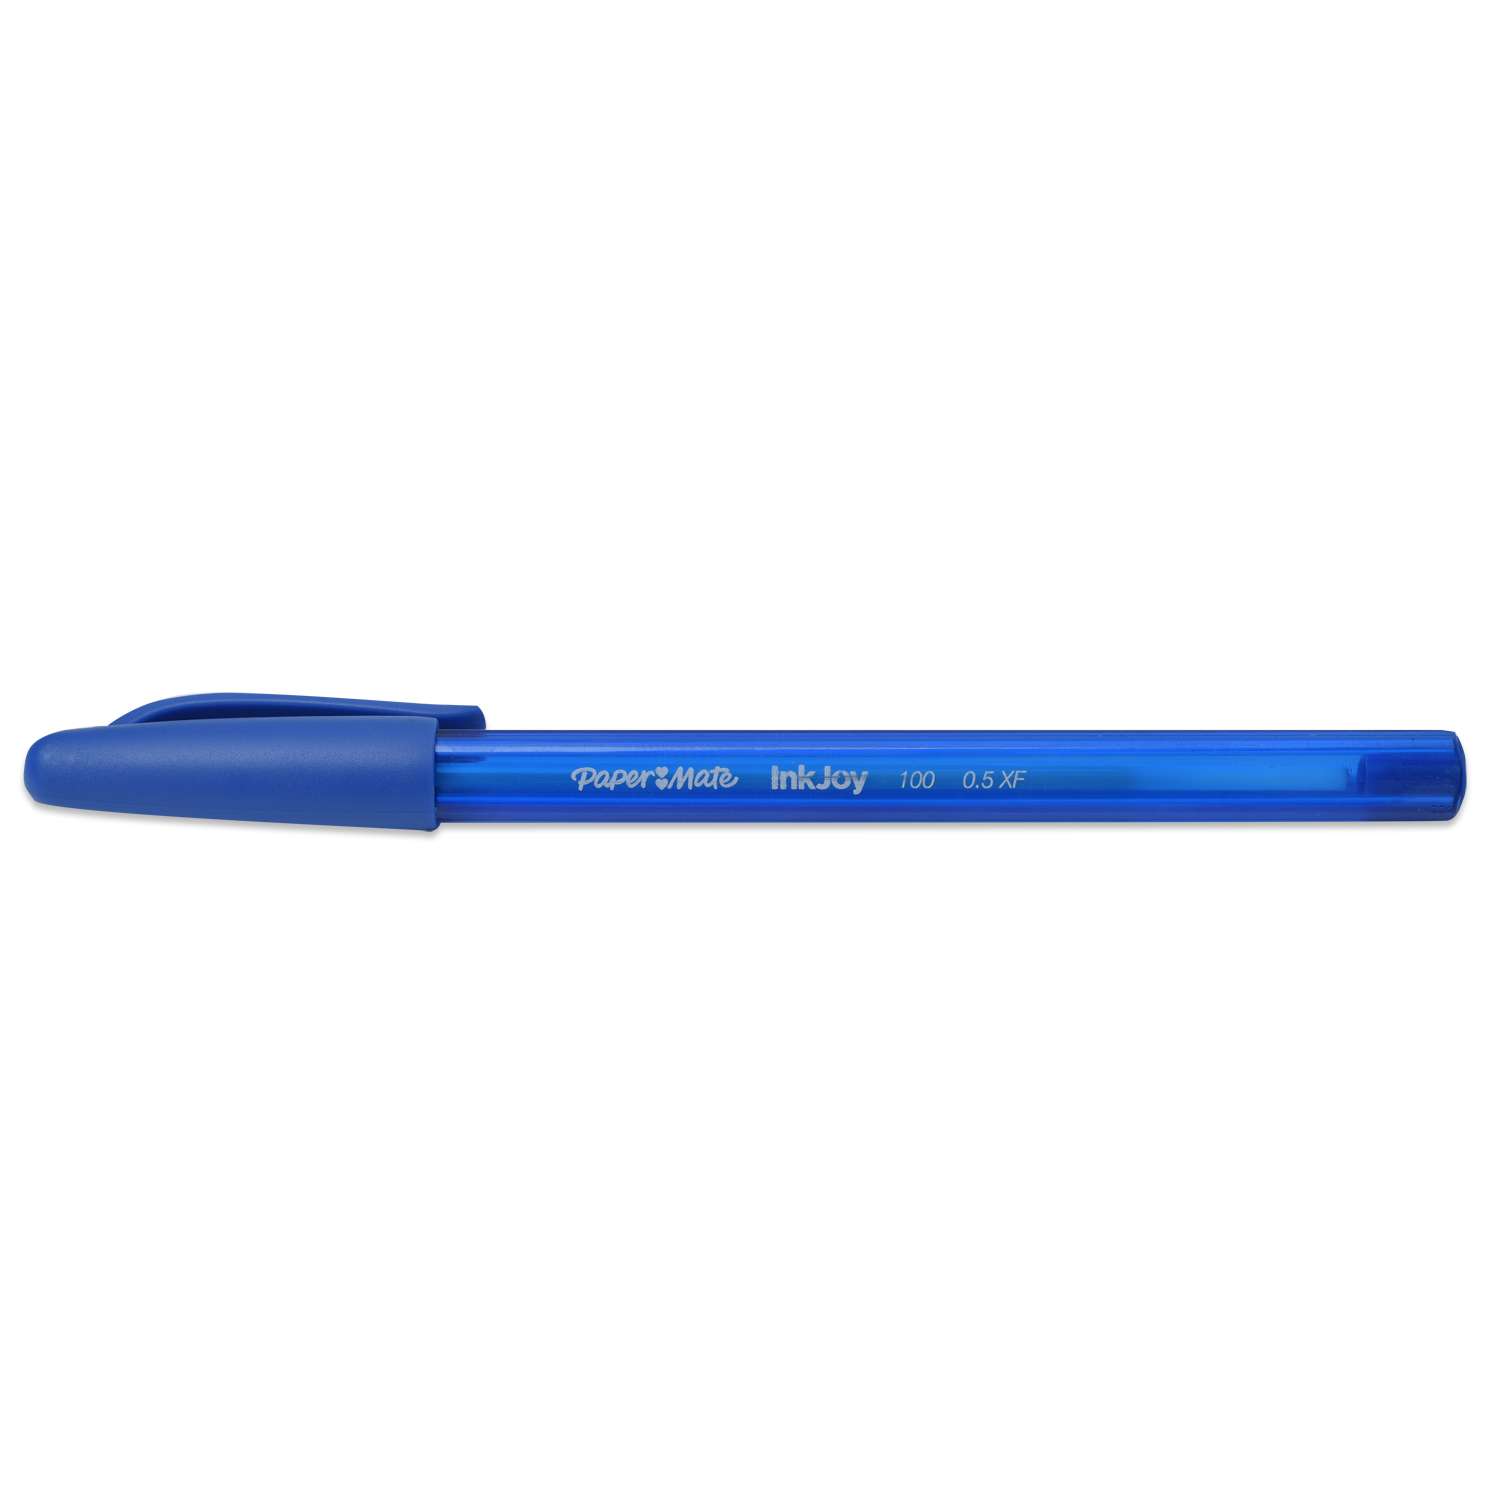 Ручка шариковая PAPER MATE inkjoy 100 синяя - фото 2